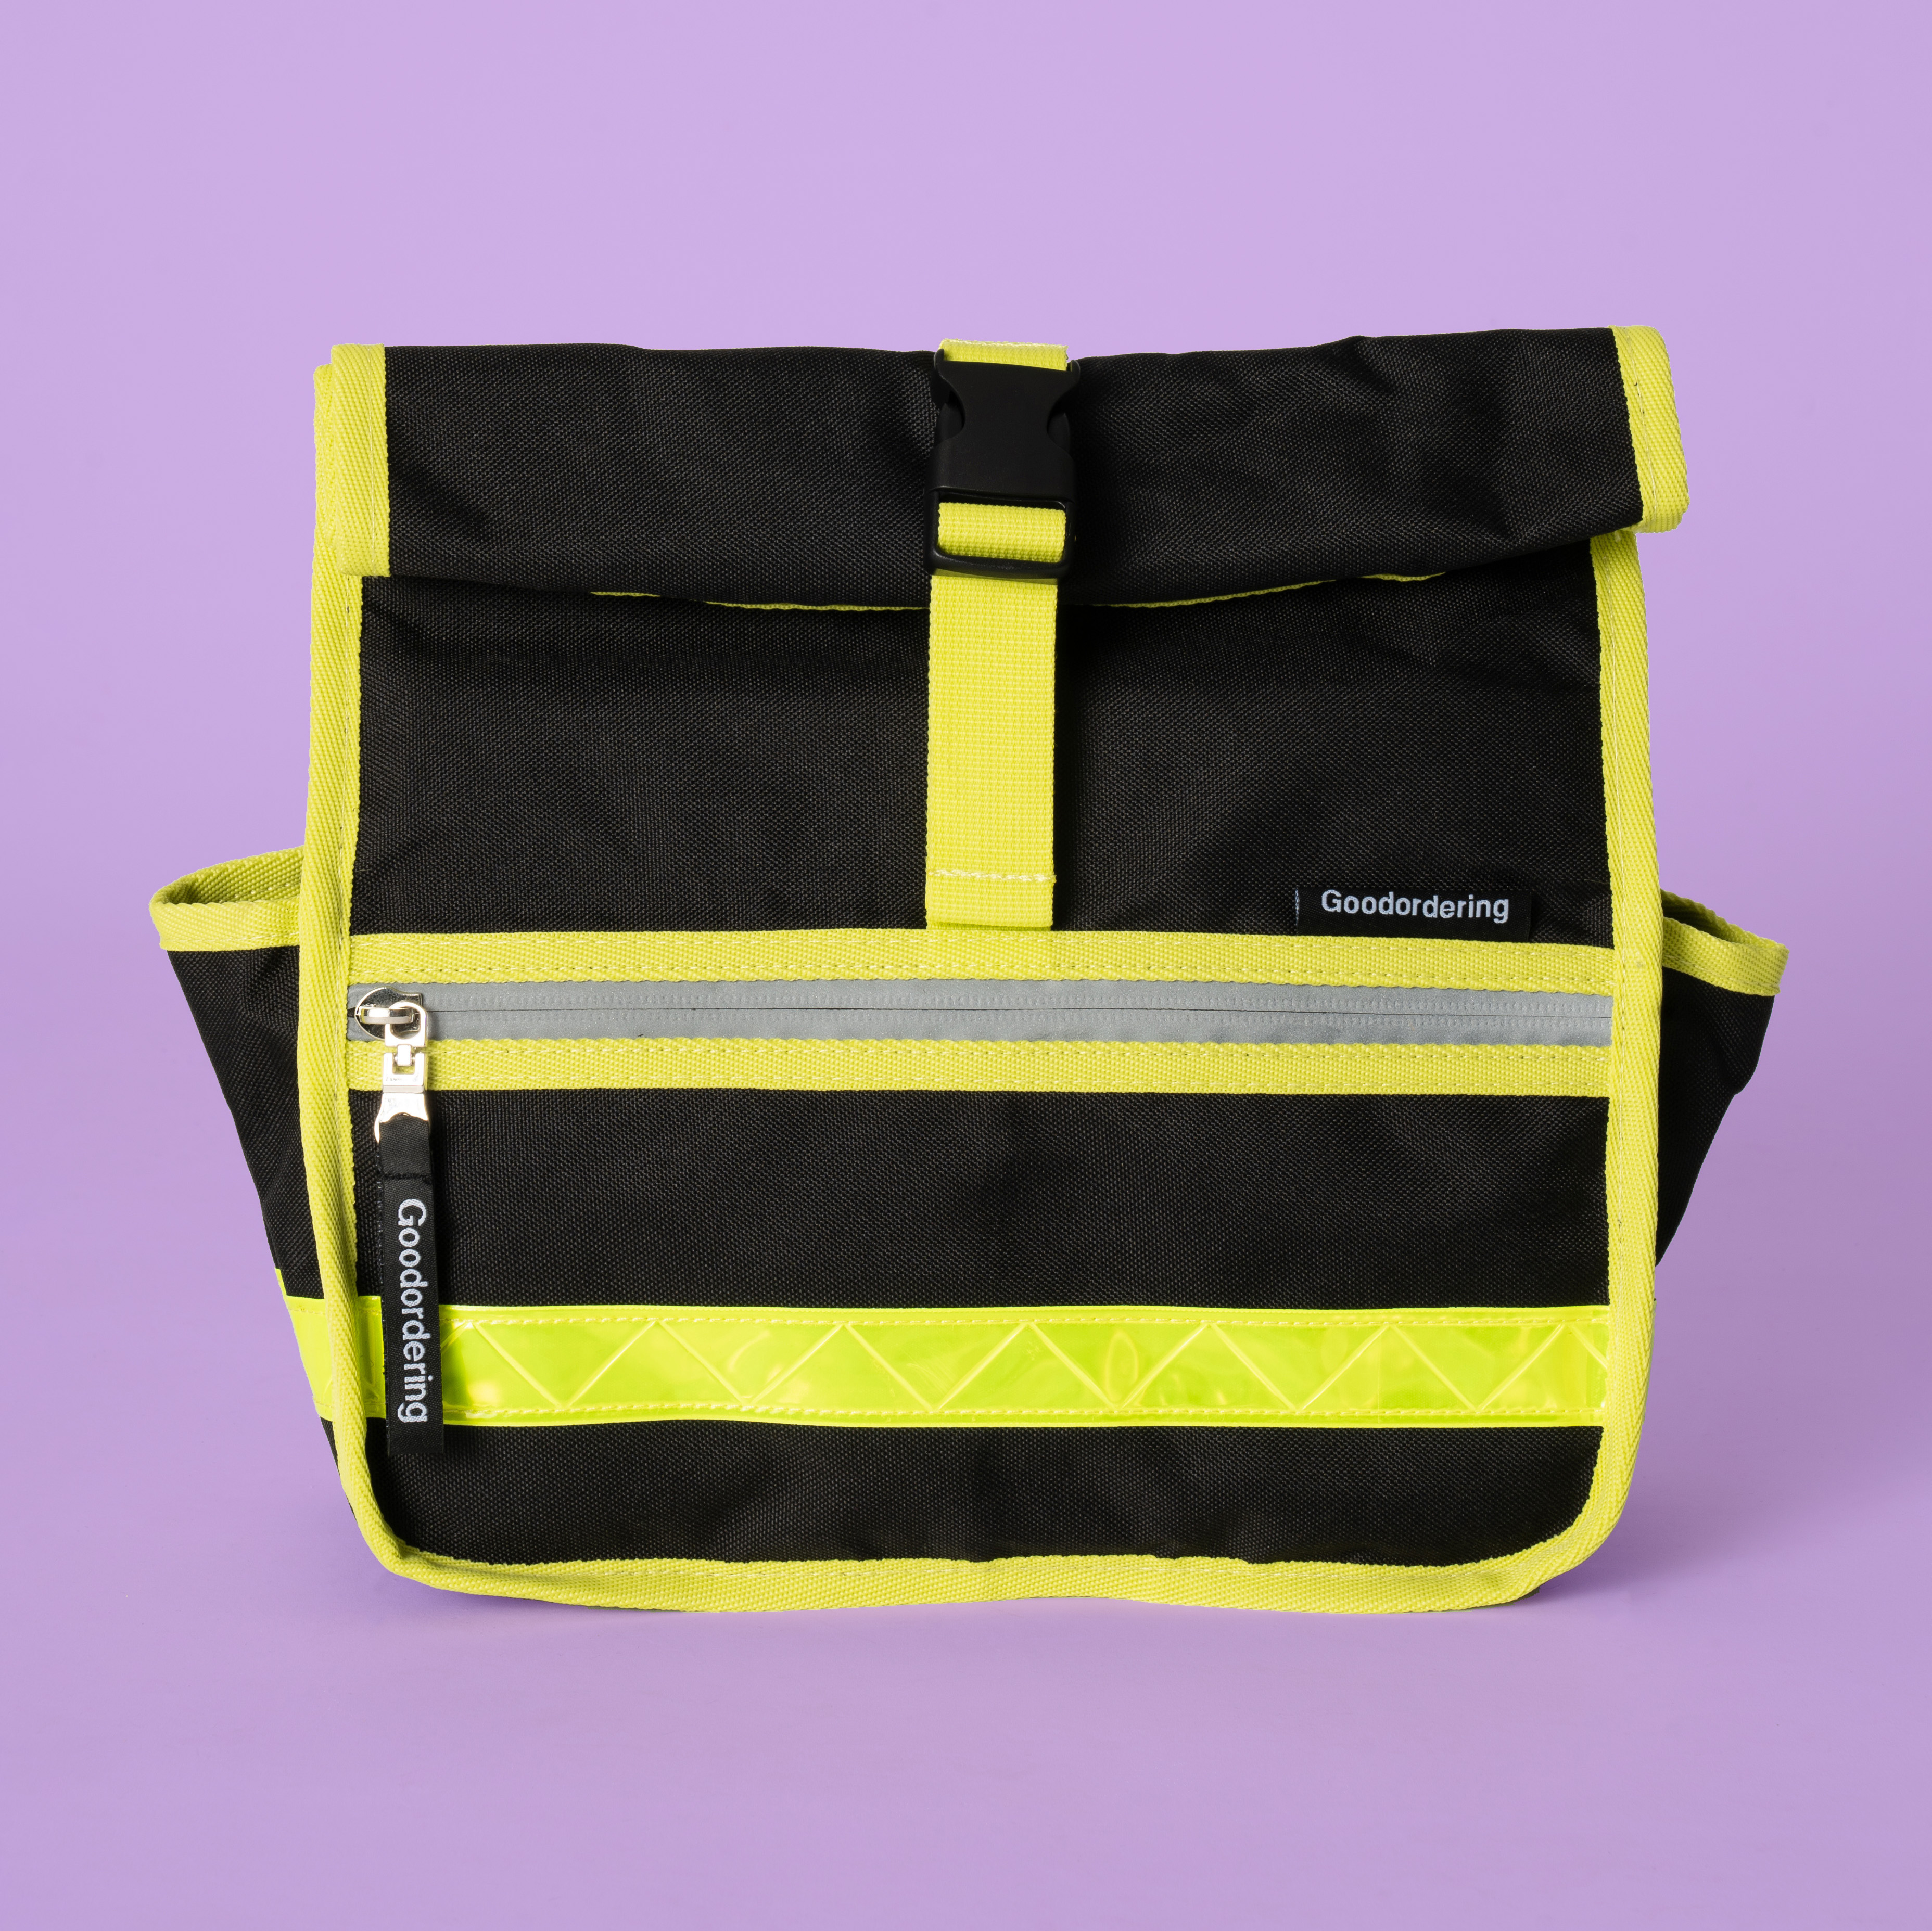 Goodordering Neon Rolltop Handlebar Bag / Satchel